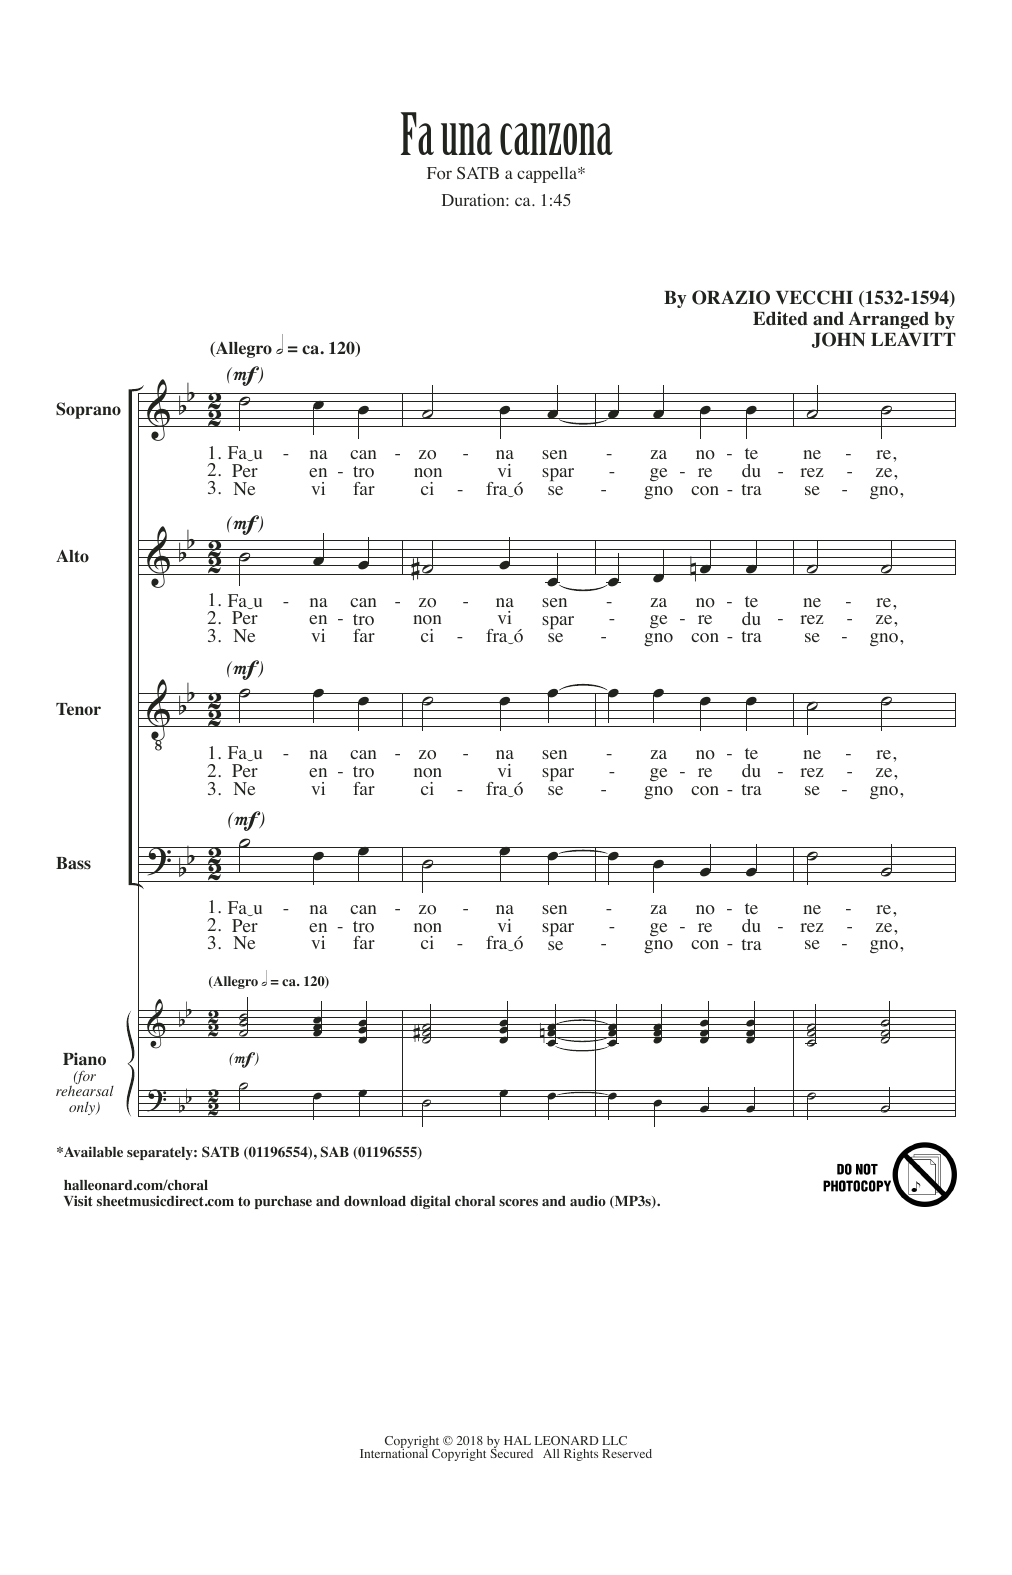 Download Orazio Vecchi Fa Una Canzona (arr. John Leavitt) Sheet Music and learn how to play SAB Choir PDF digital score in minutes